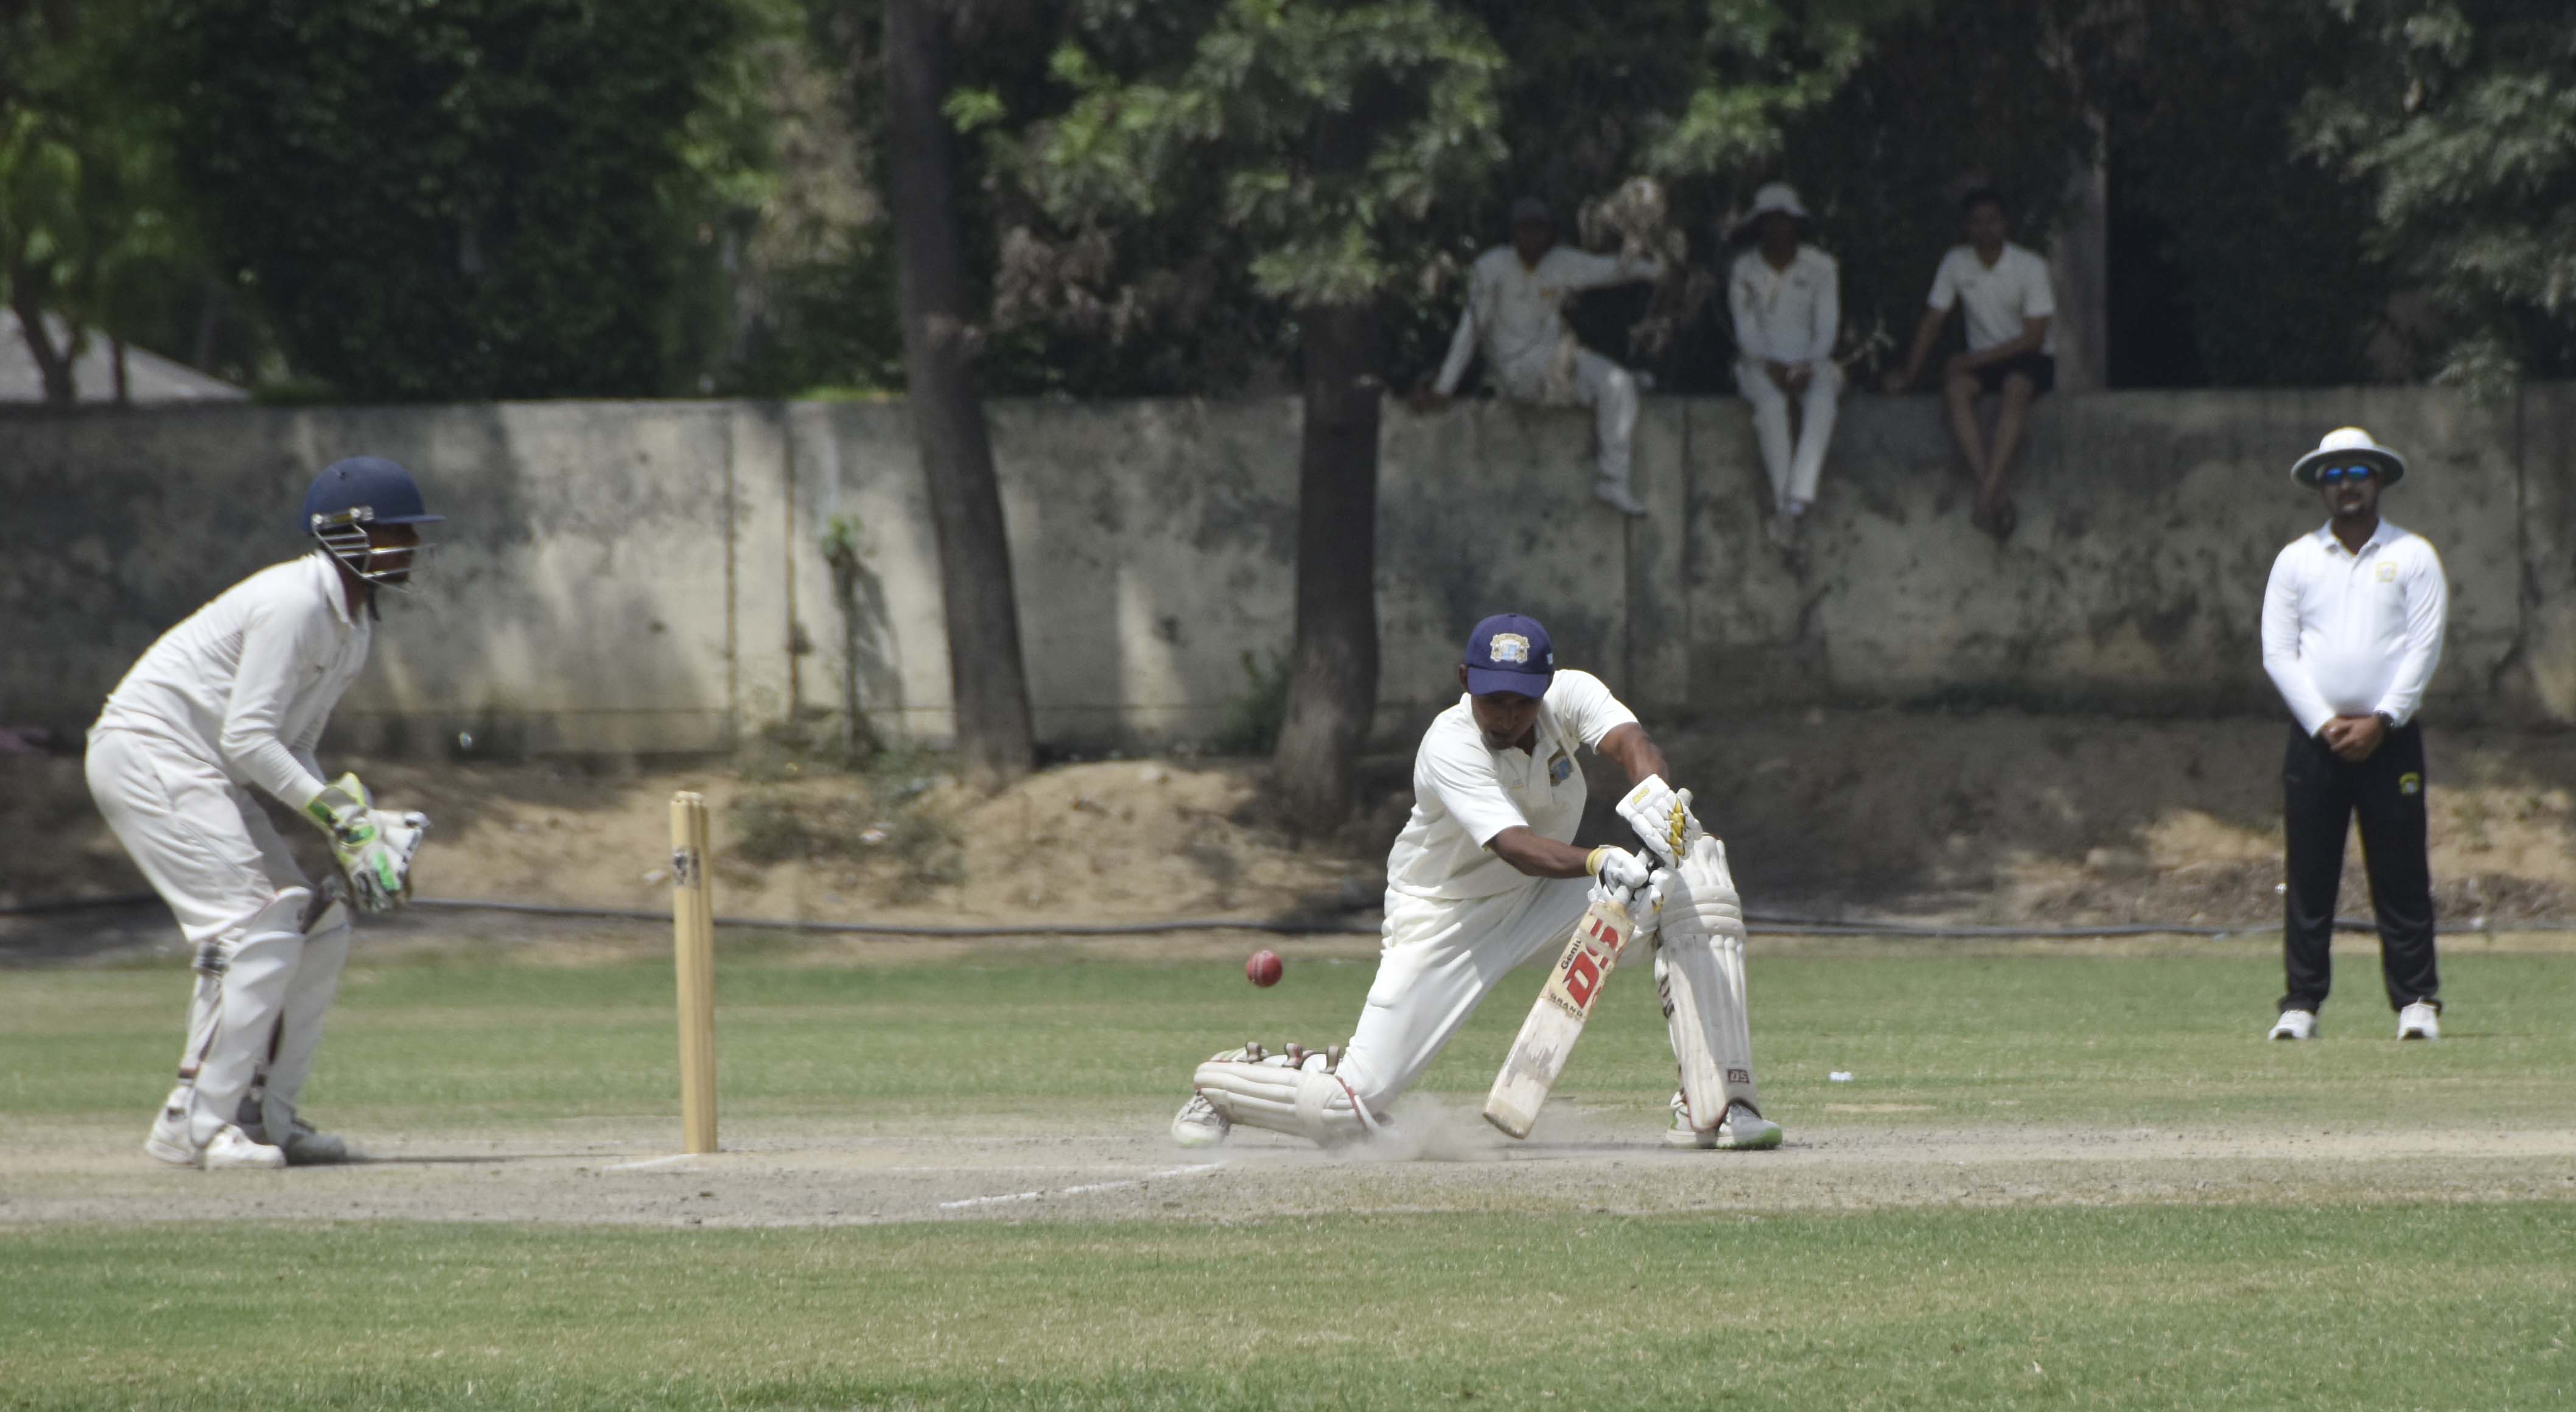 Inter-District U-23 Cricket Championship: Ludhiana pip Bathinda on basis of first innings lead, enter final